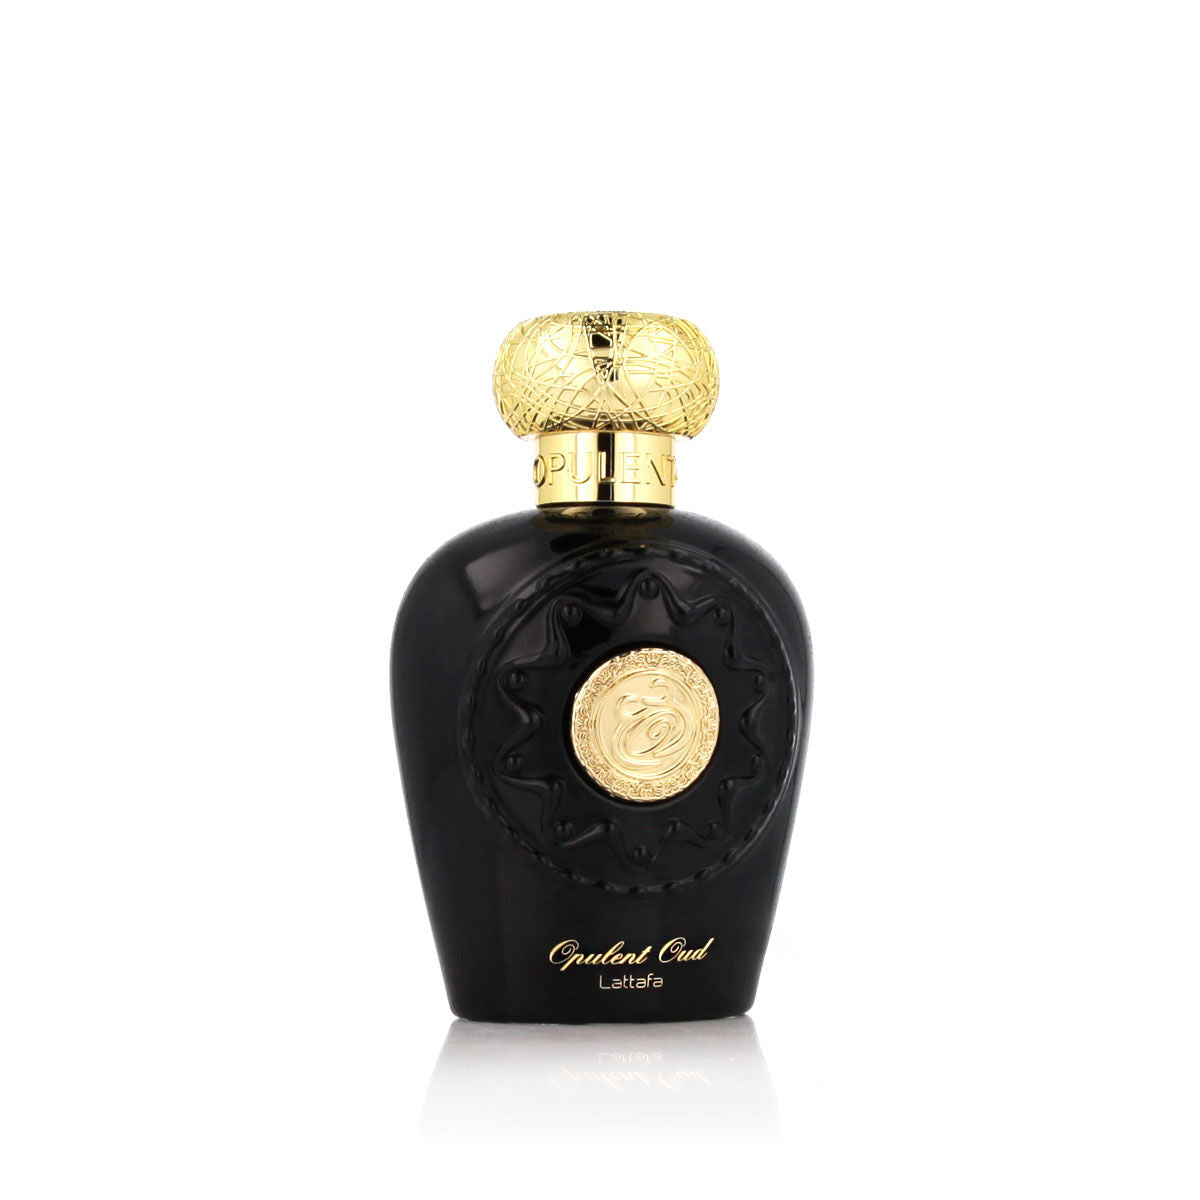 Perfume Unisex Lattafa EDP Opulent Oud (100 ml)